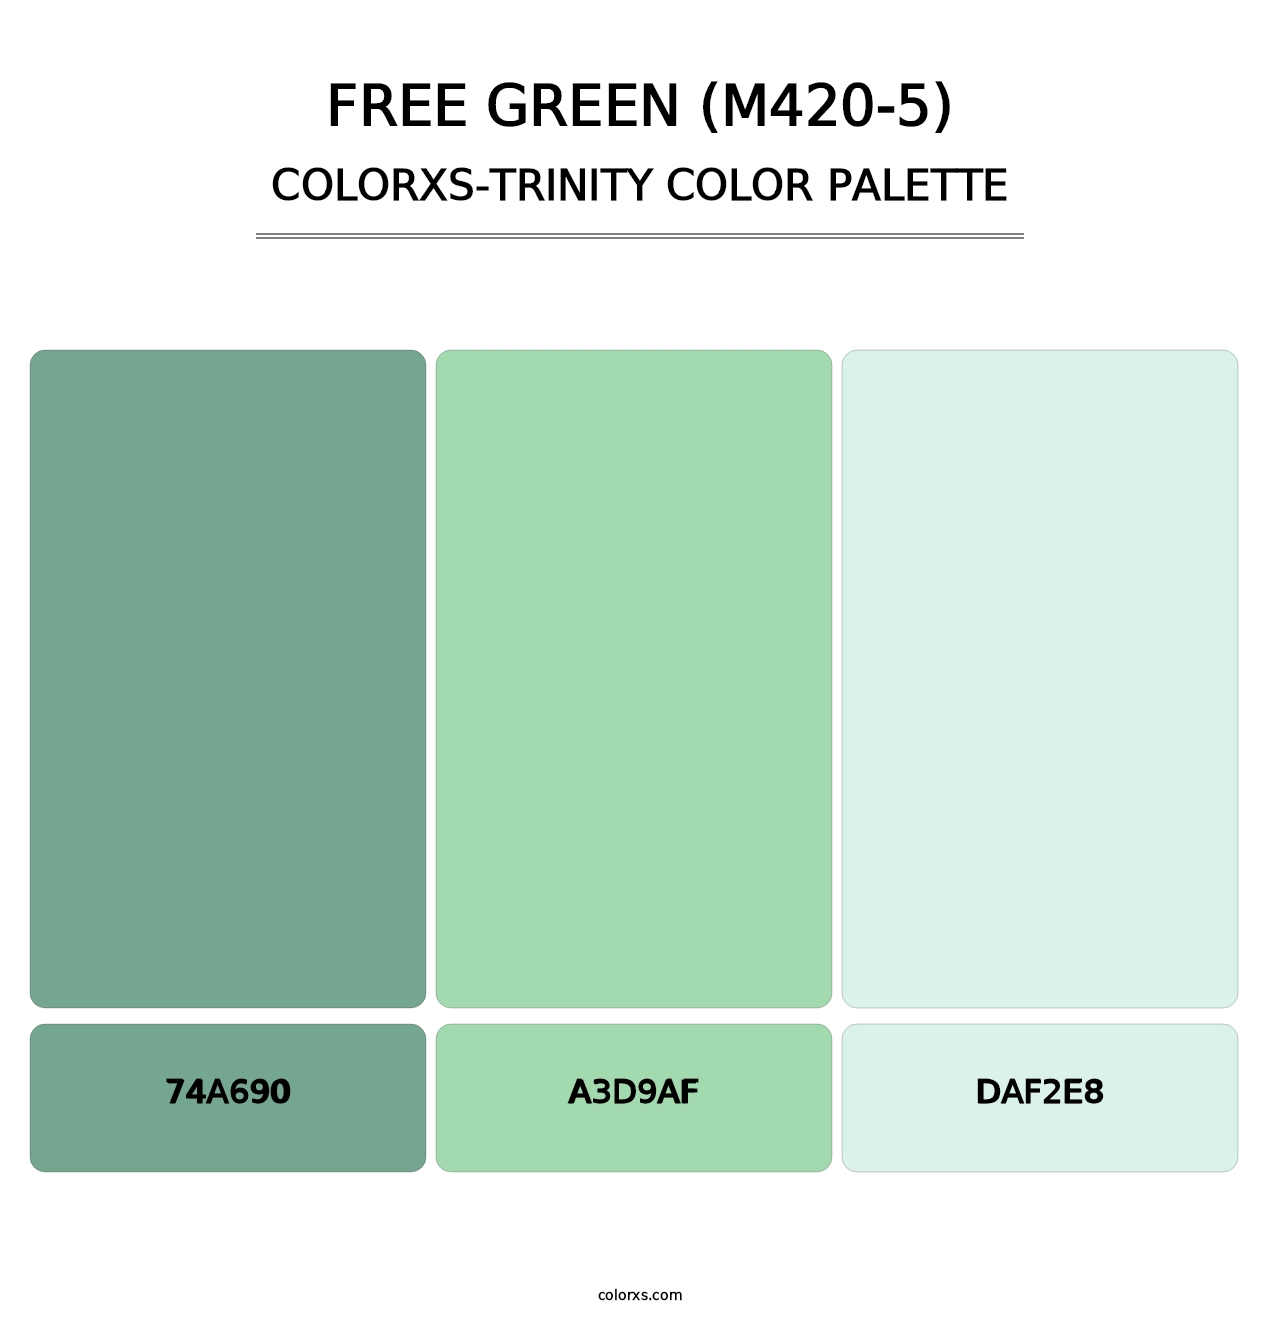 Free Green (M420-5) - Colorxs Trinity Palette